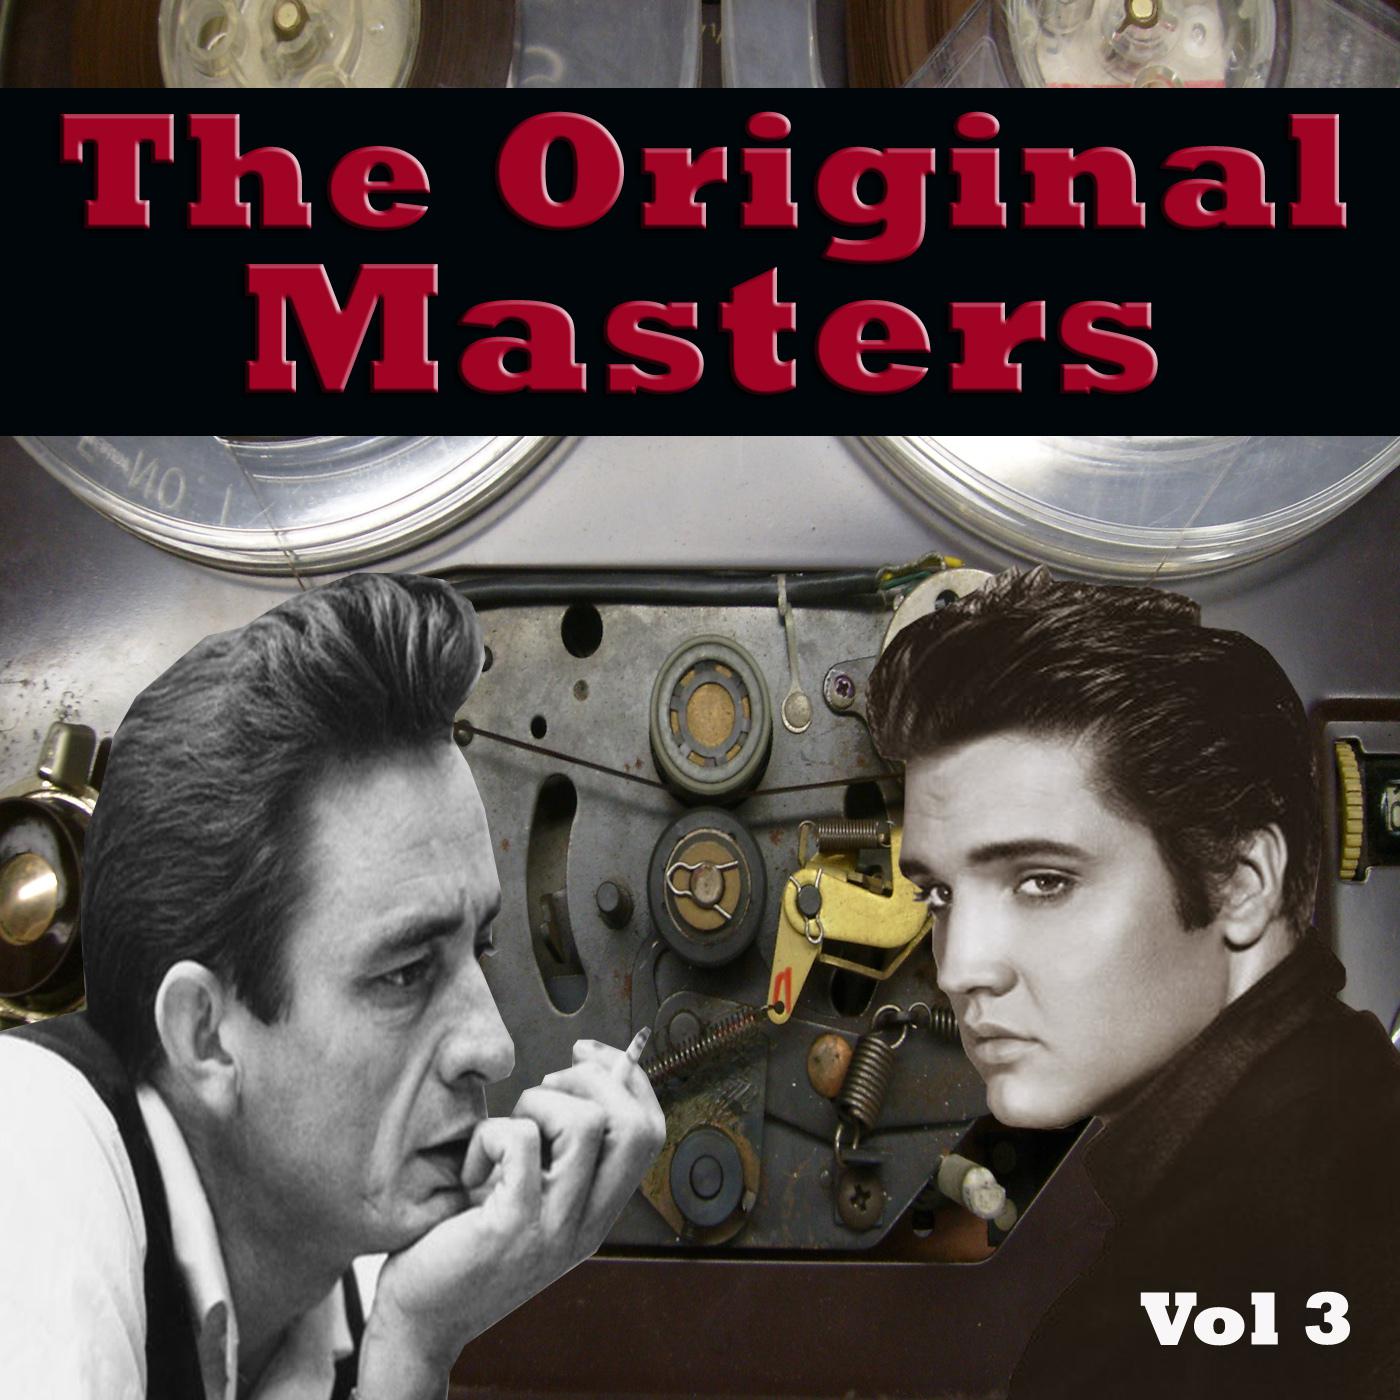 The Original Masters Vol 3